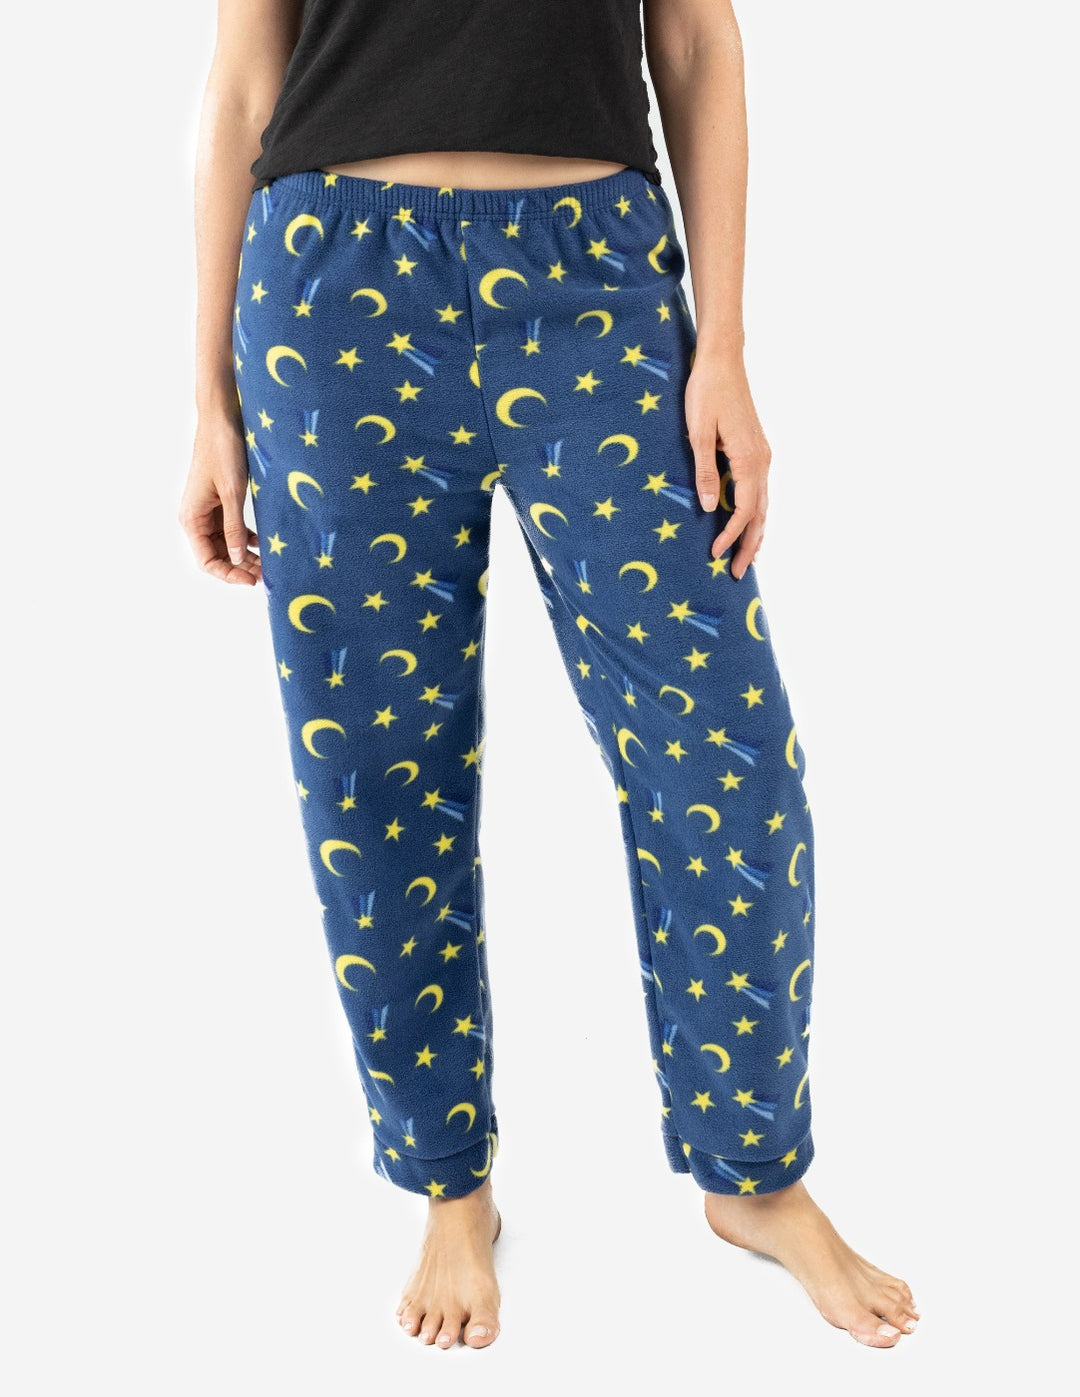 Just Love Plaid Women's Pajama Pants - Soft Sleepwear for Comfortable  Nights (Blue - Stars, X-large)